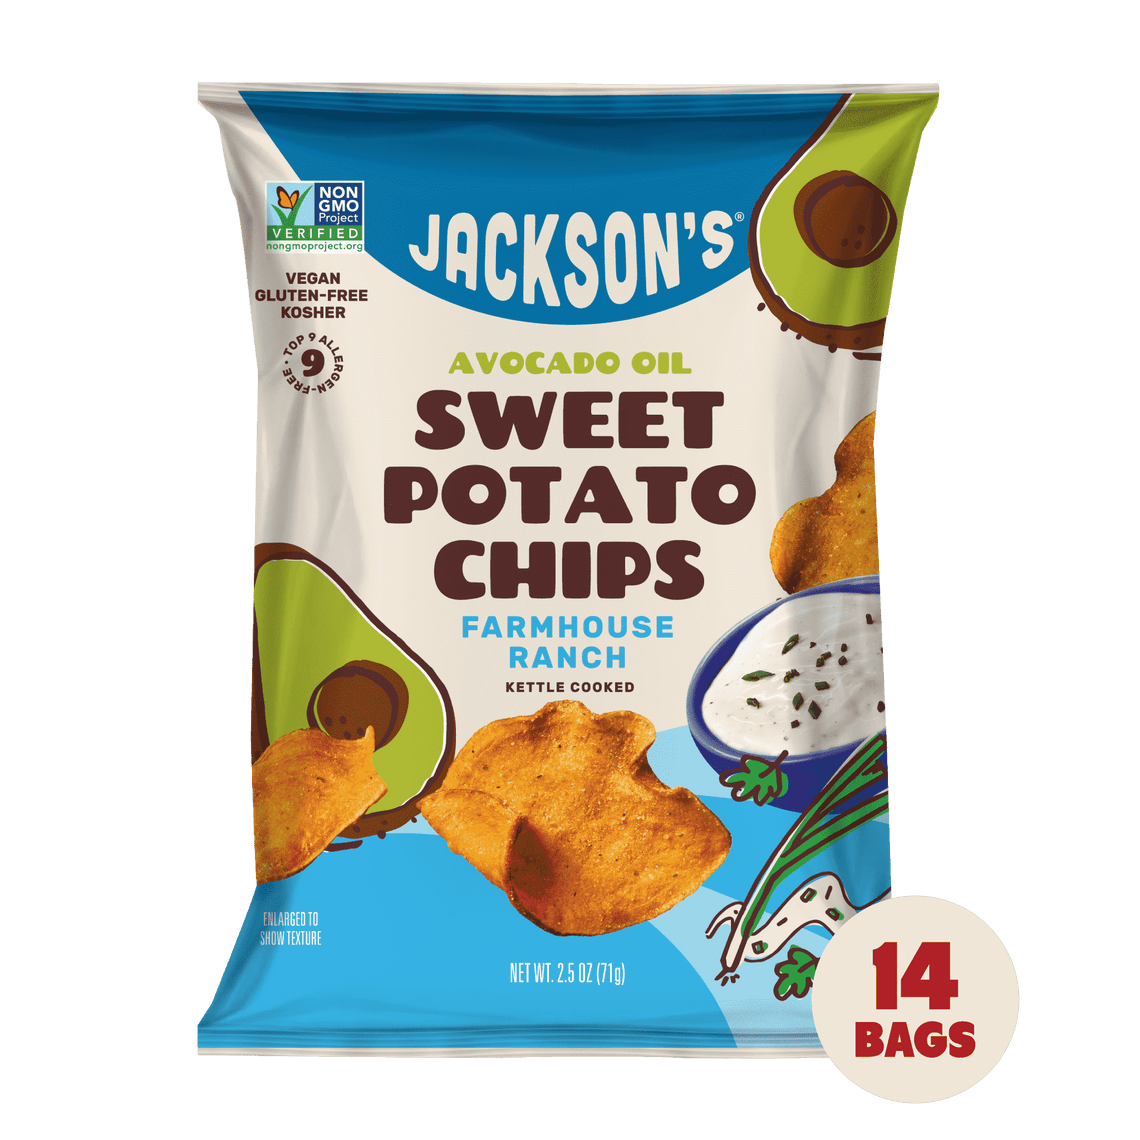 Vegan Farmhouse Ranch Sweet Potato Chips in Avocado Oil 2.5oz - 14 Bags. Paleo-friendly snack